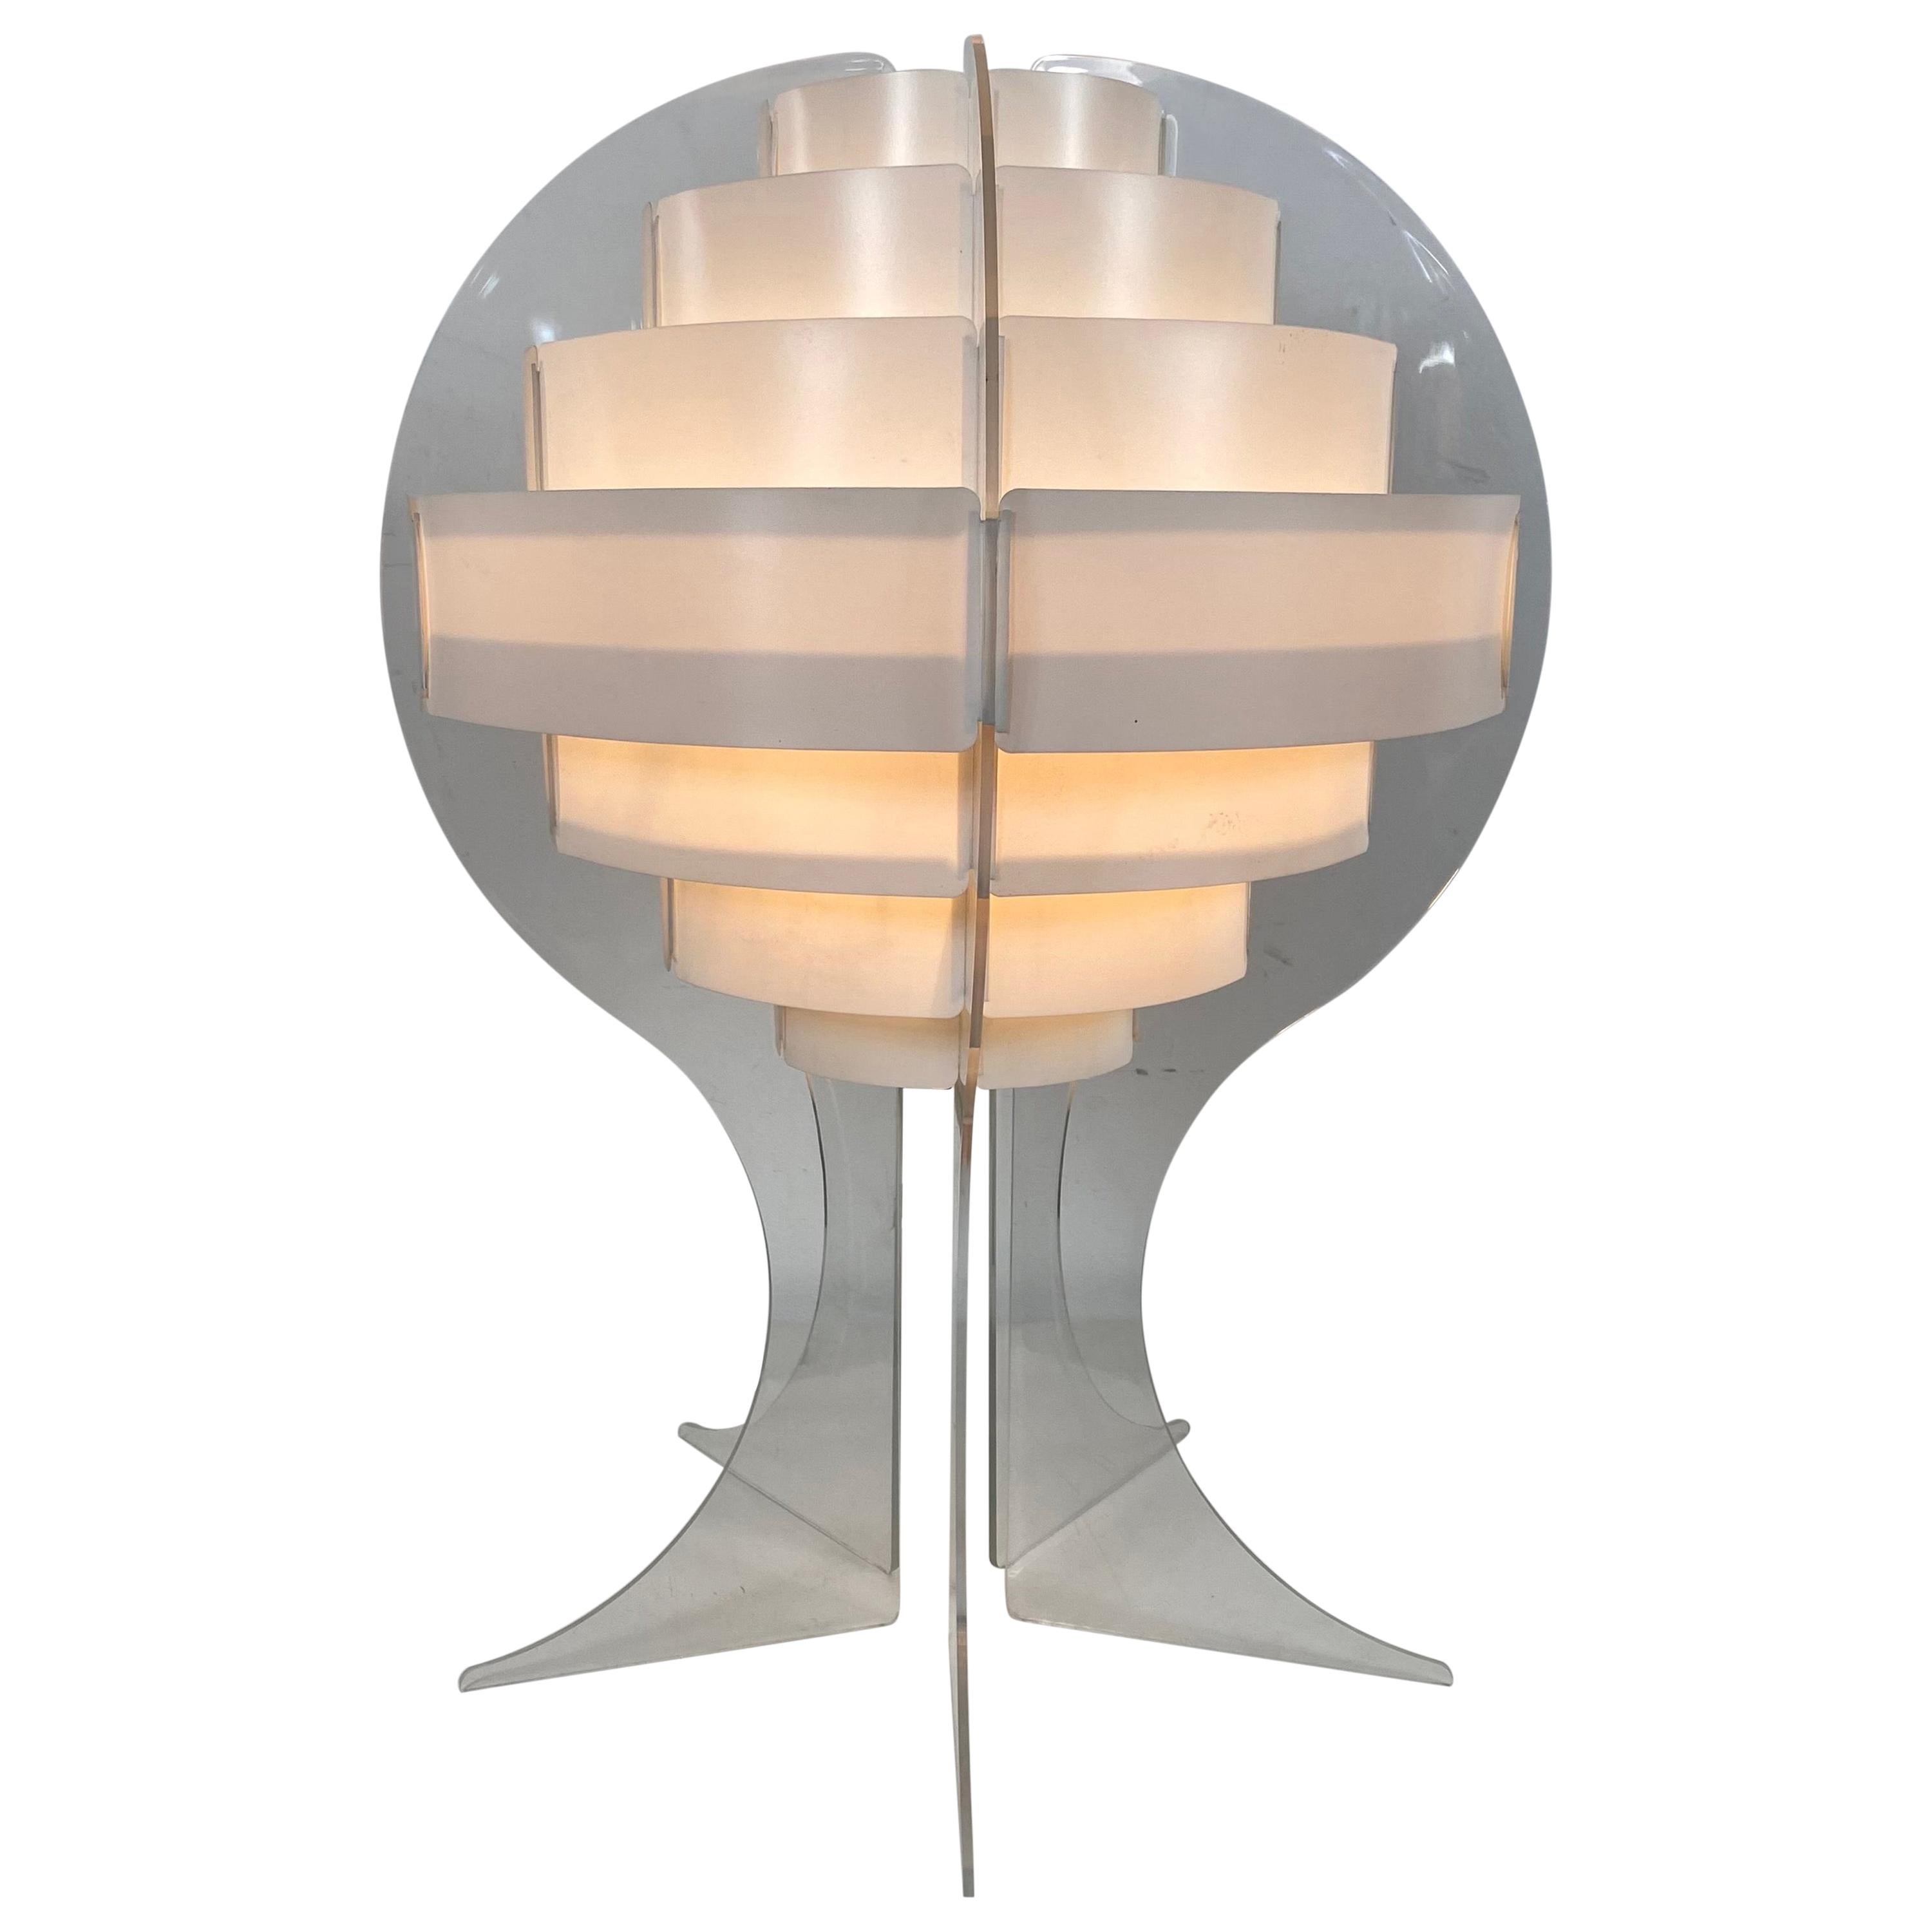 Classic Danish Pop 1960s /Space Age Flemming Brylle & Preben Jacobsen Table Lamp